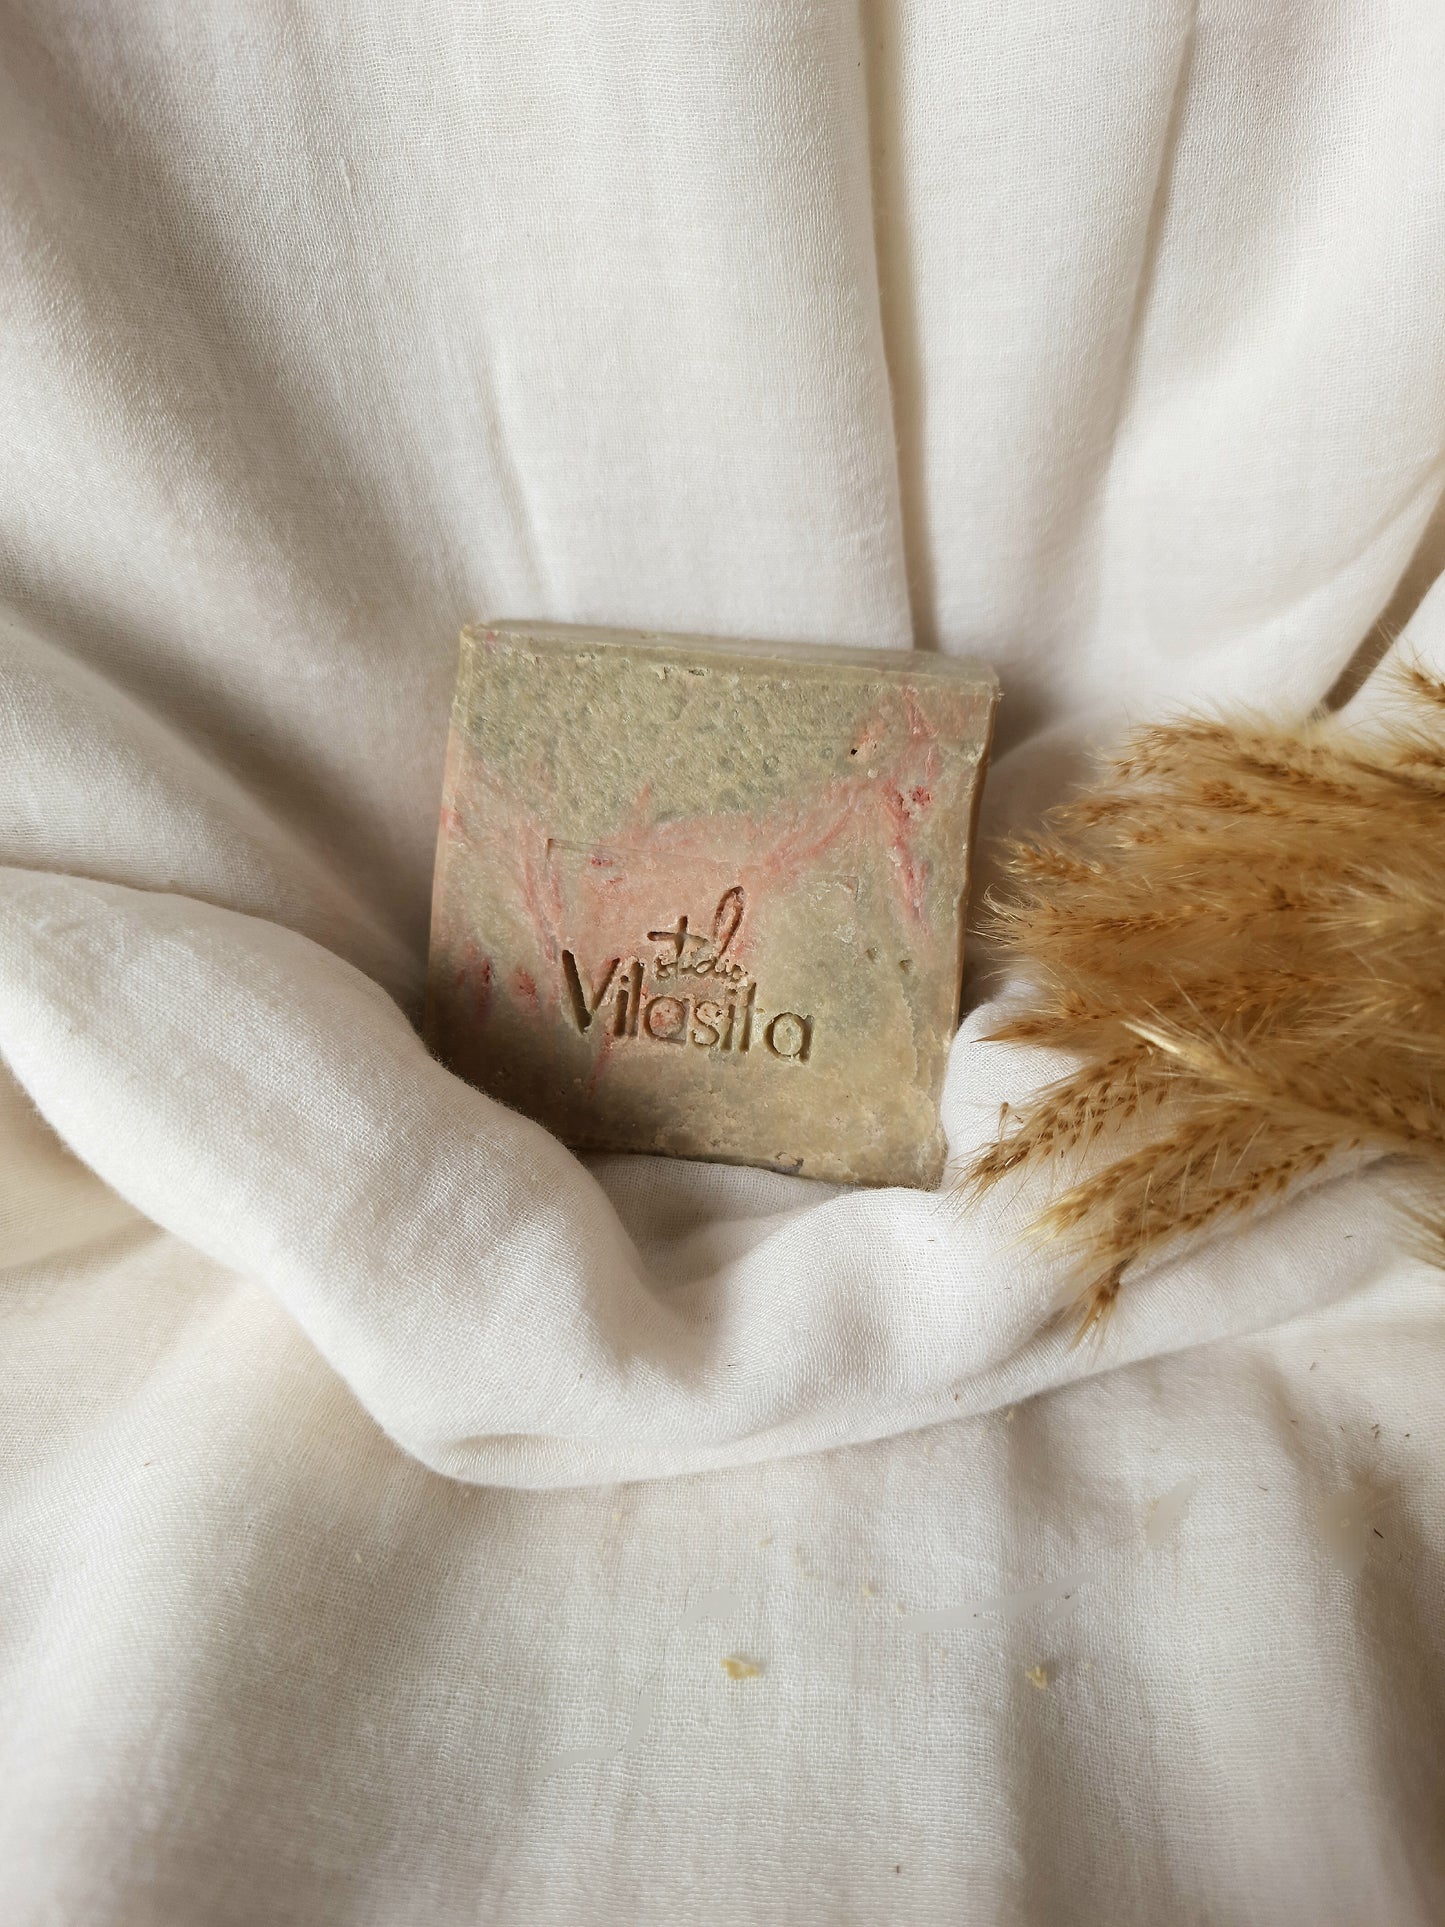 Studio Vilasita - Noor - Plum & Ylang ylang - Handmade Soap